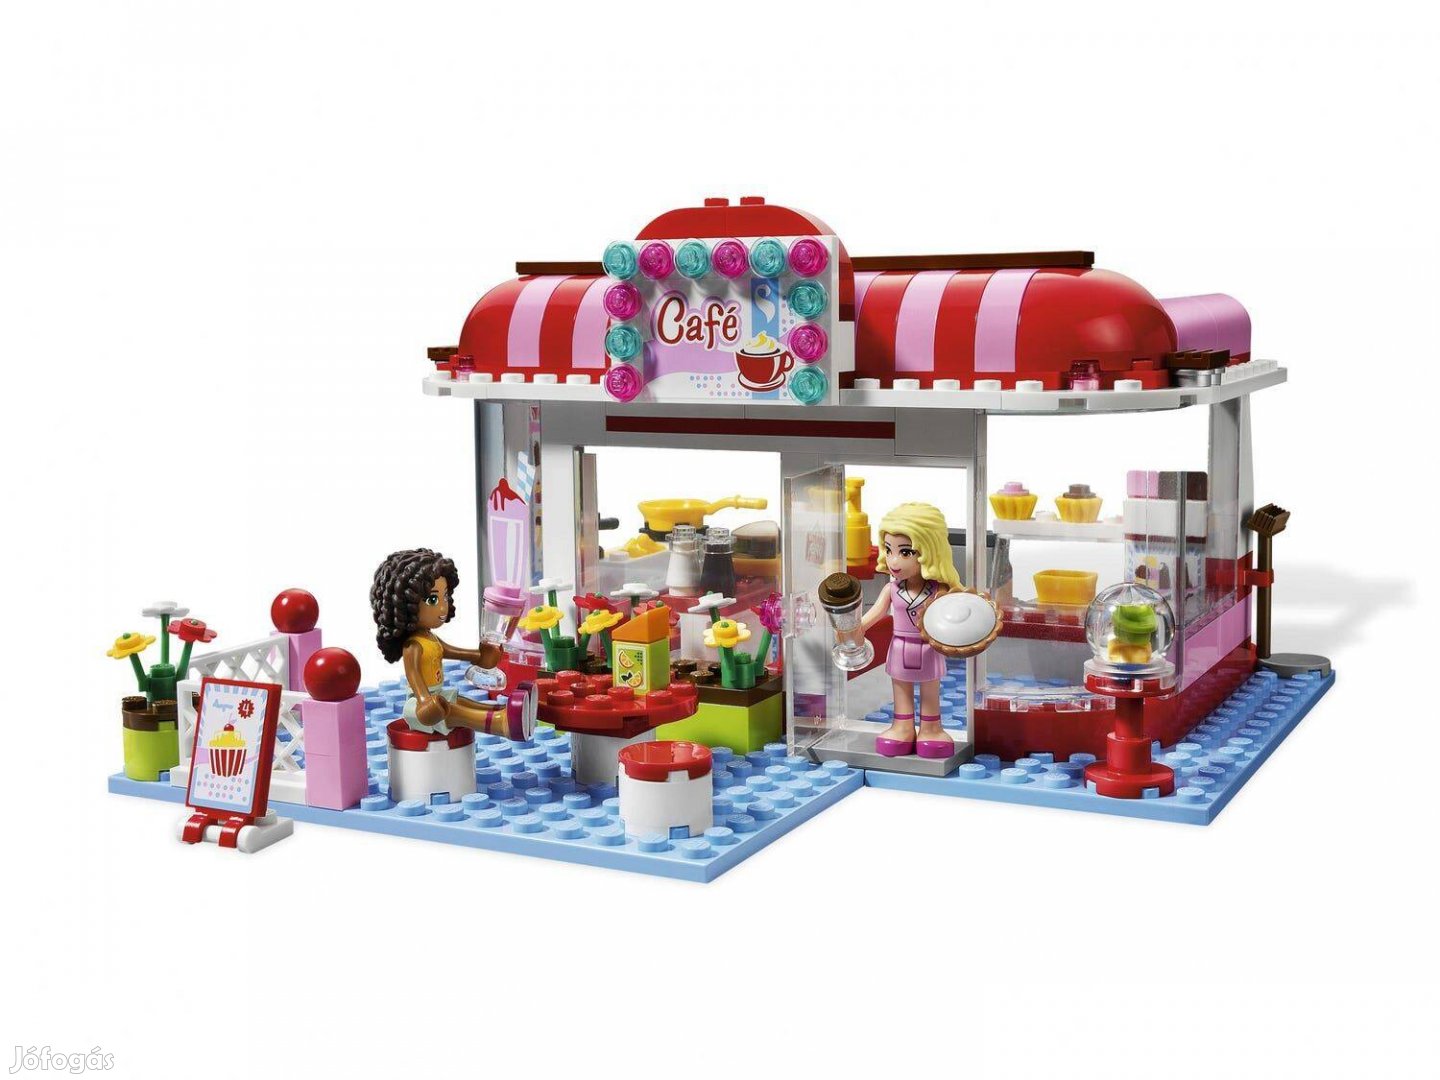 LEGO 3061 [Friends] - City park café